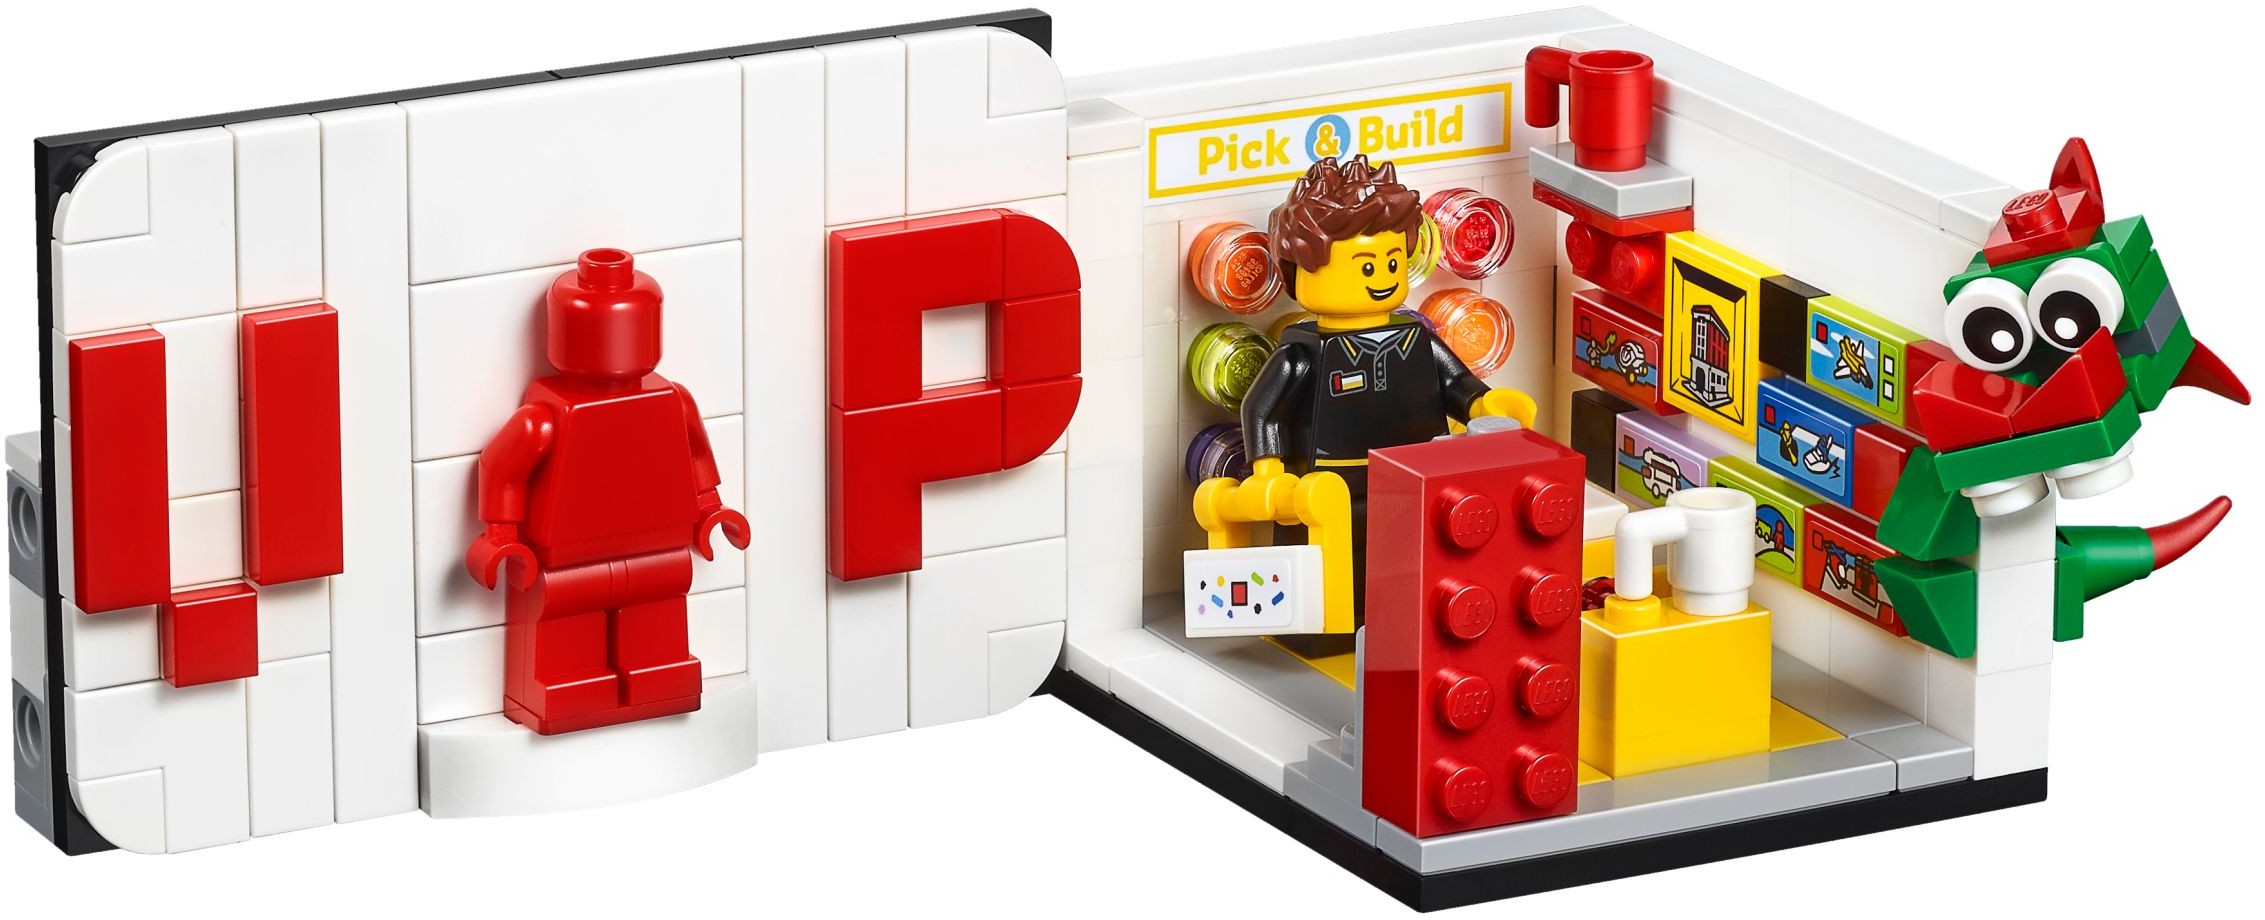 Image result for lego store set